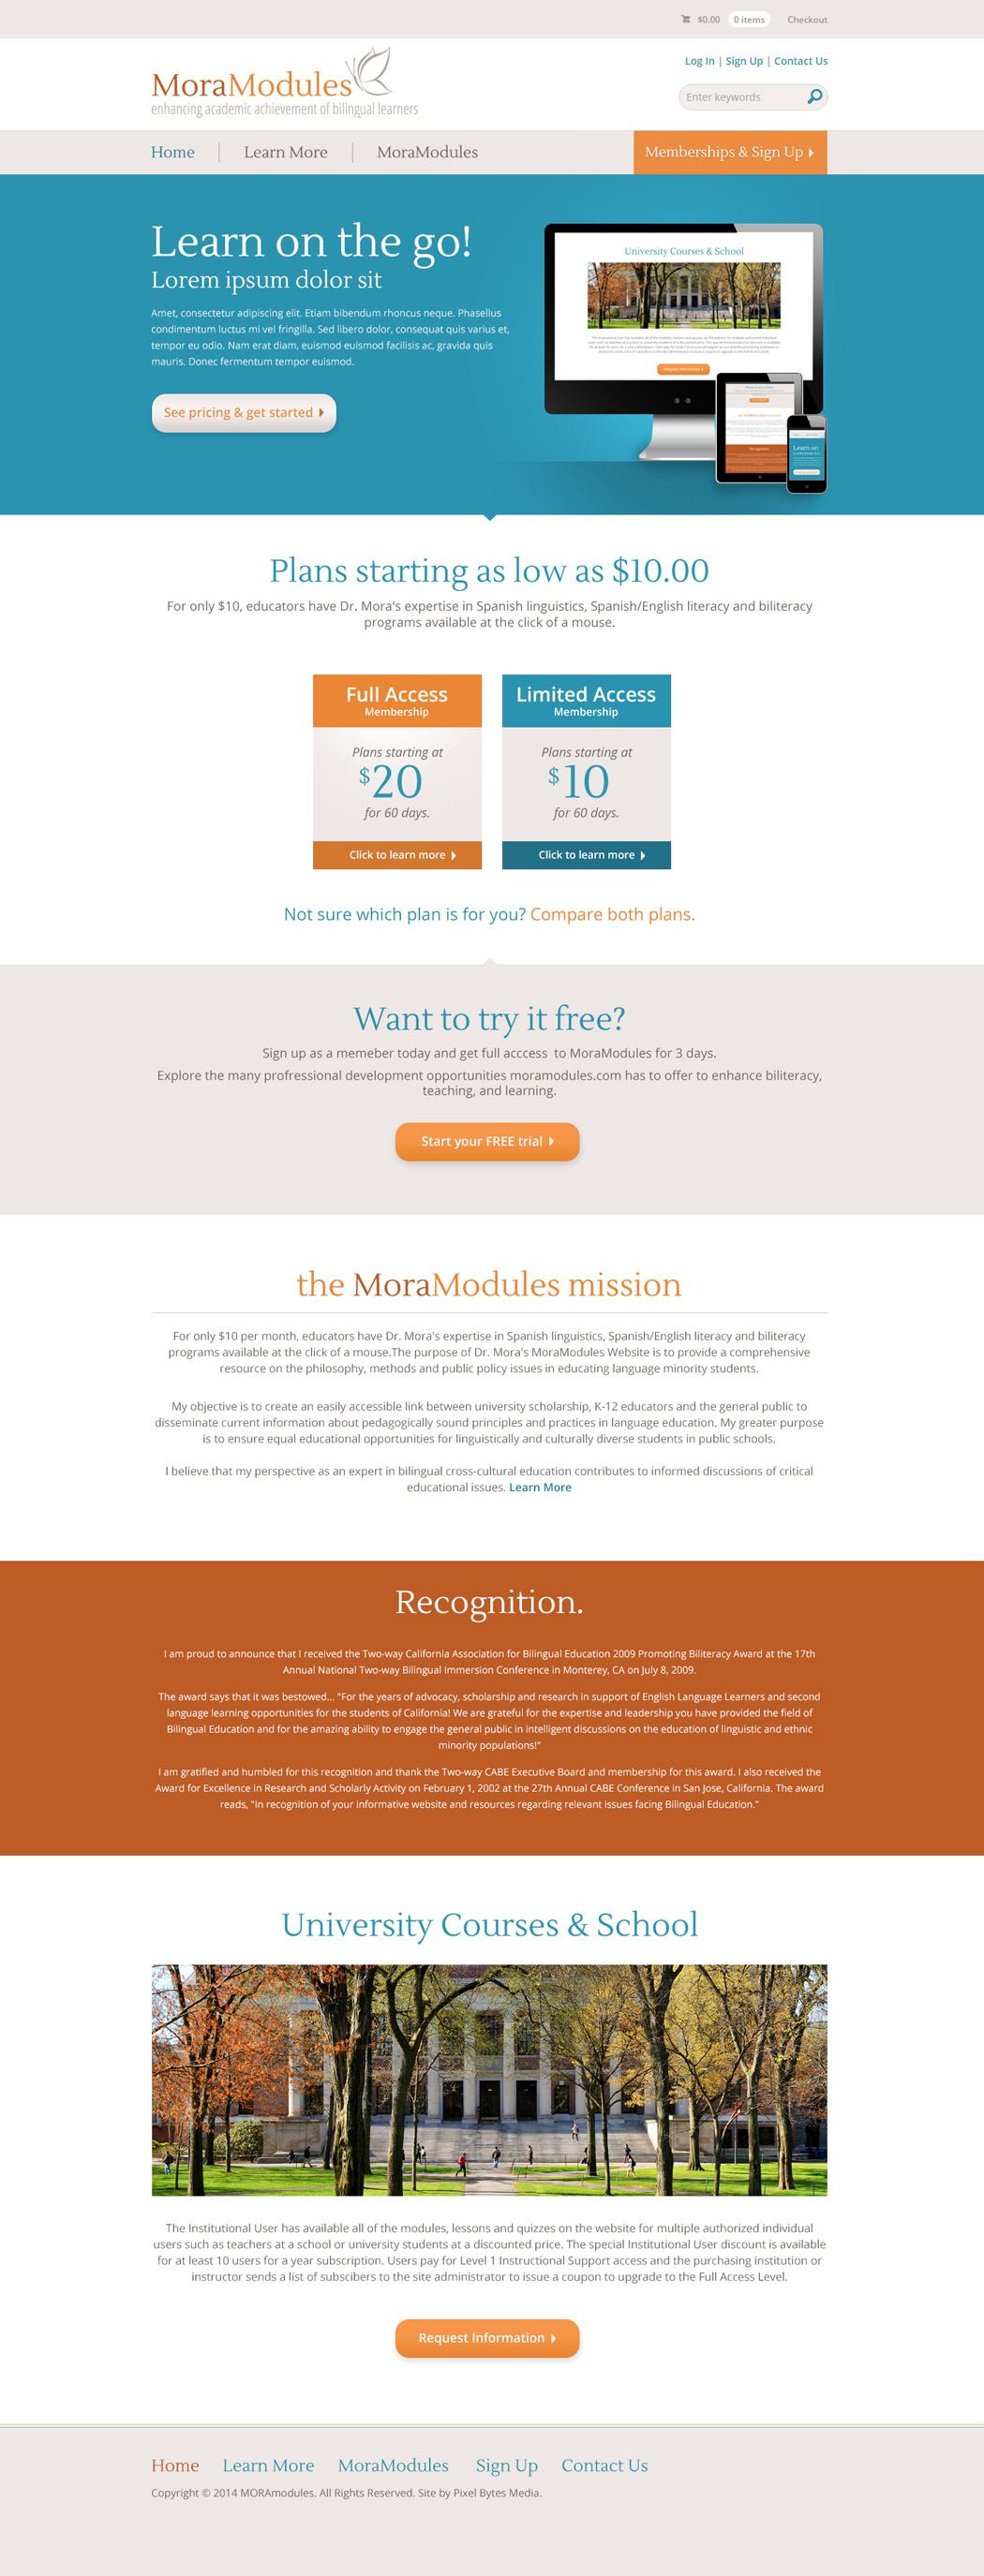 San Diego e-Learning Website Design - MoraModules